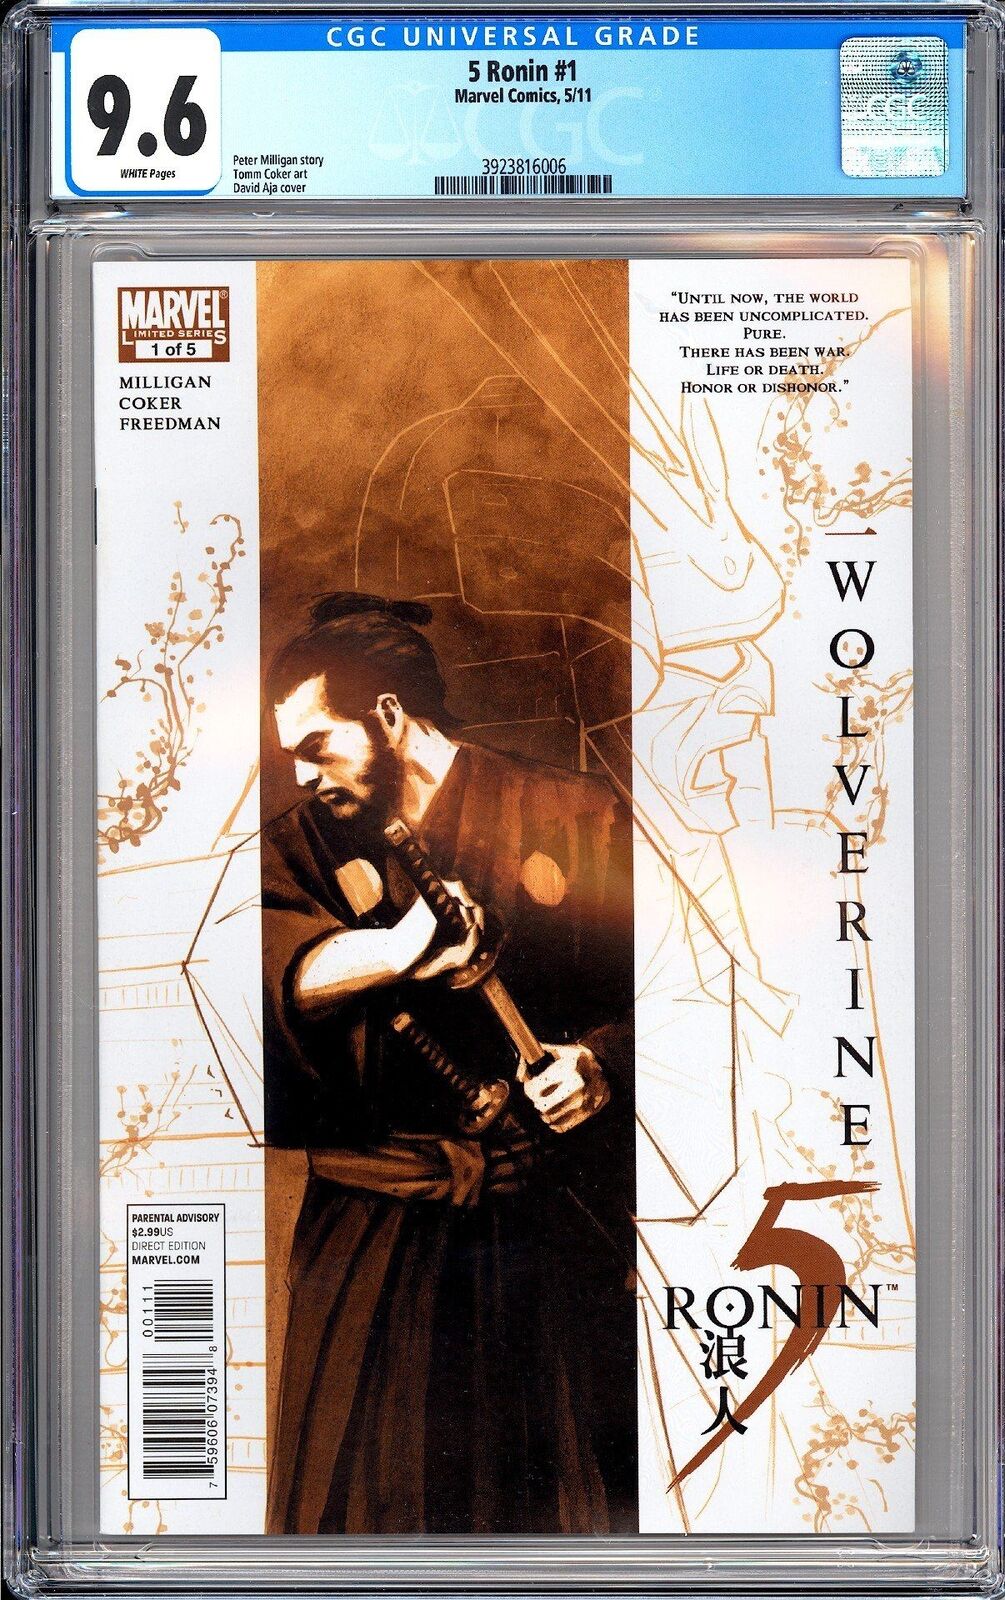 5 Ronin #1 CGC 9.6 2011 3923816006 David Aja Cover Wolverine